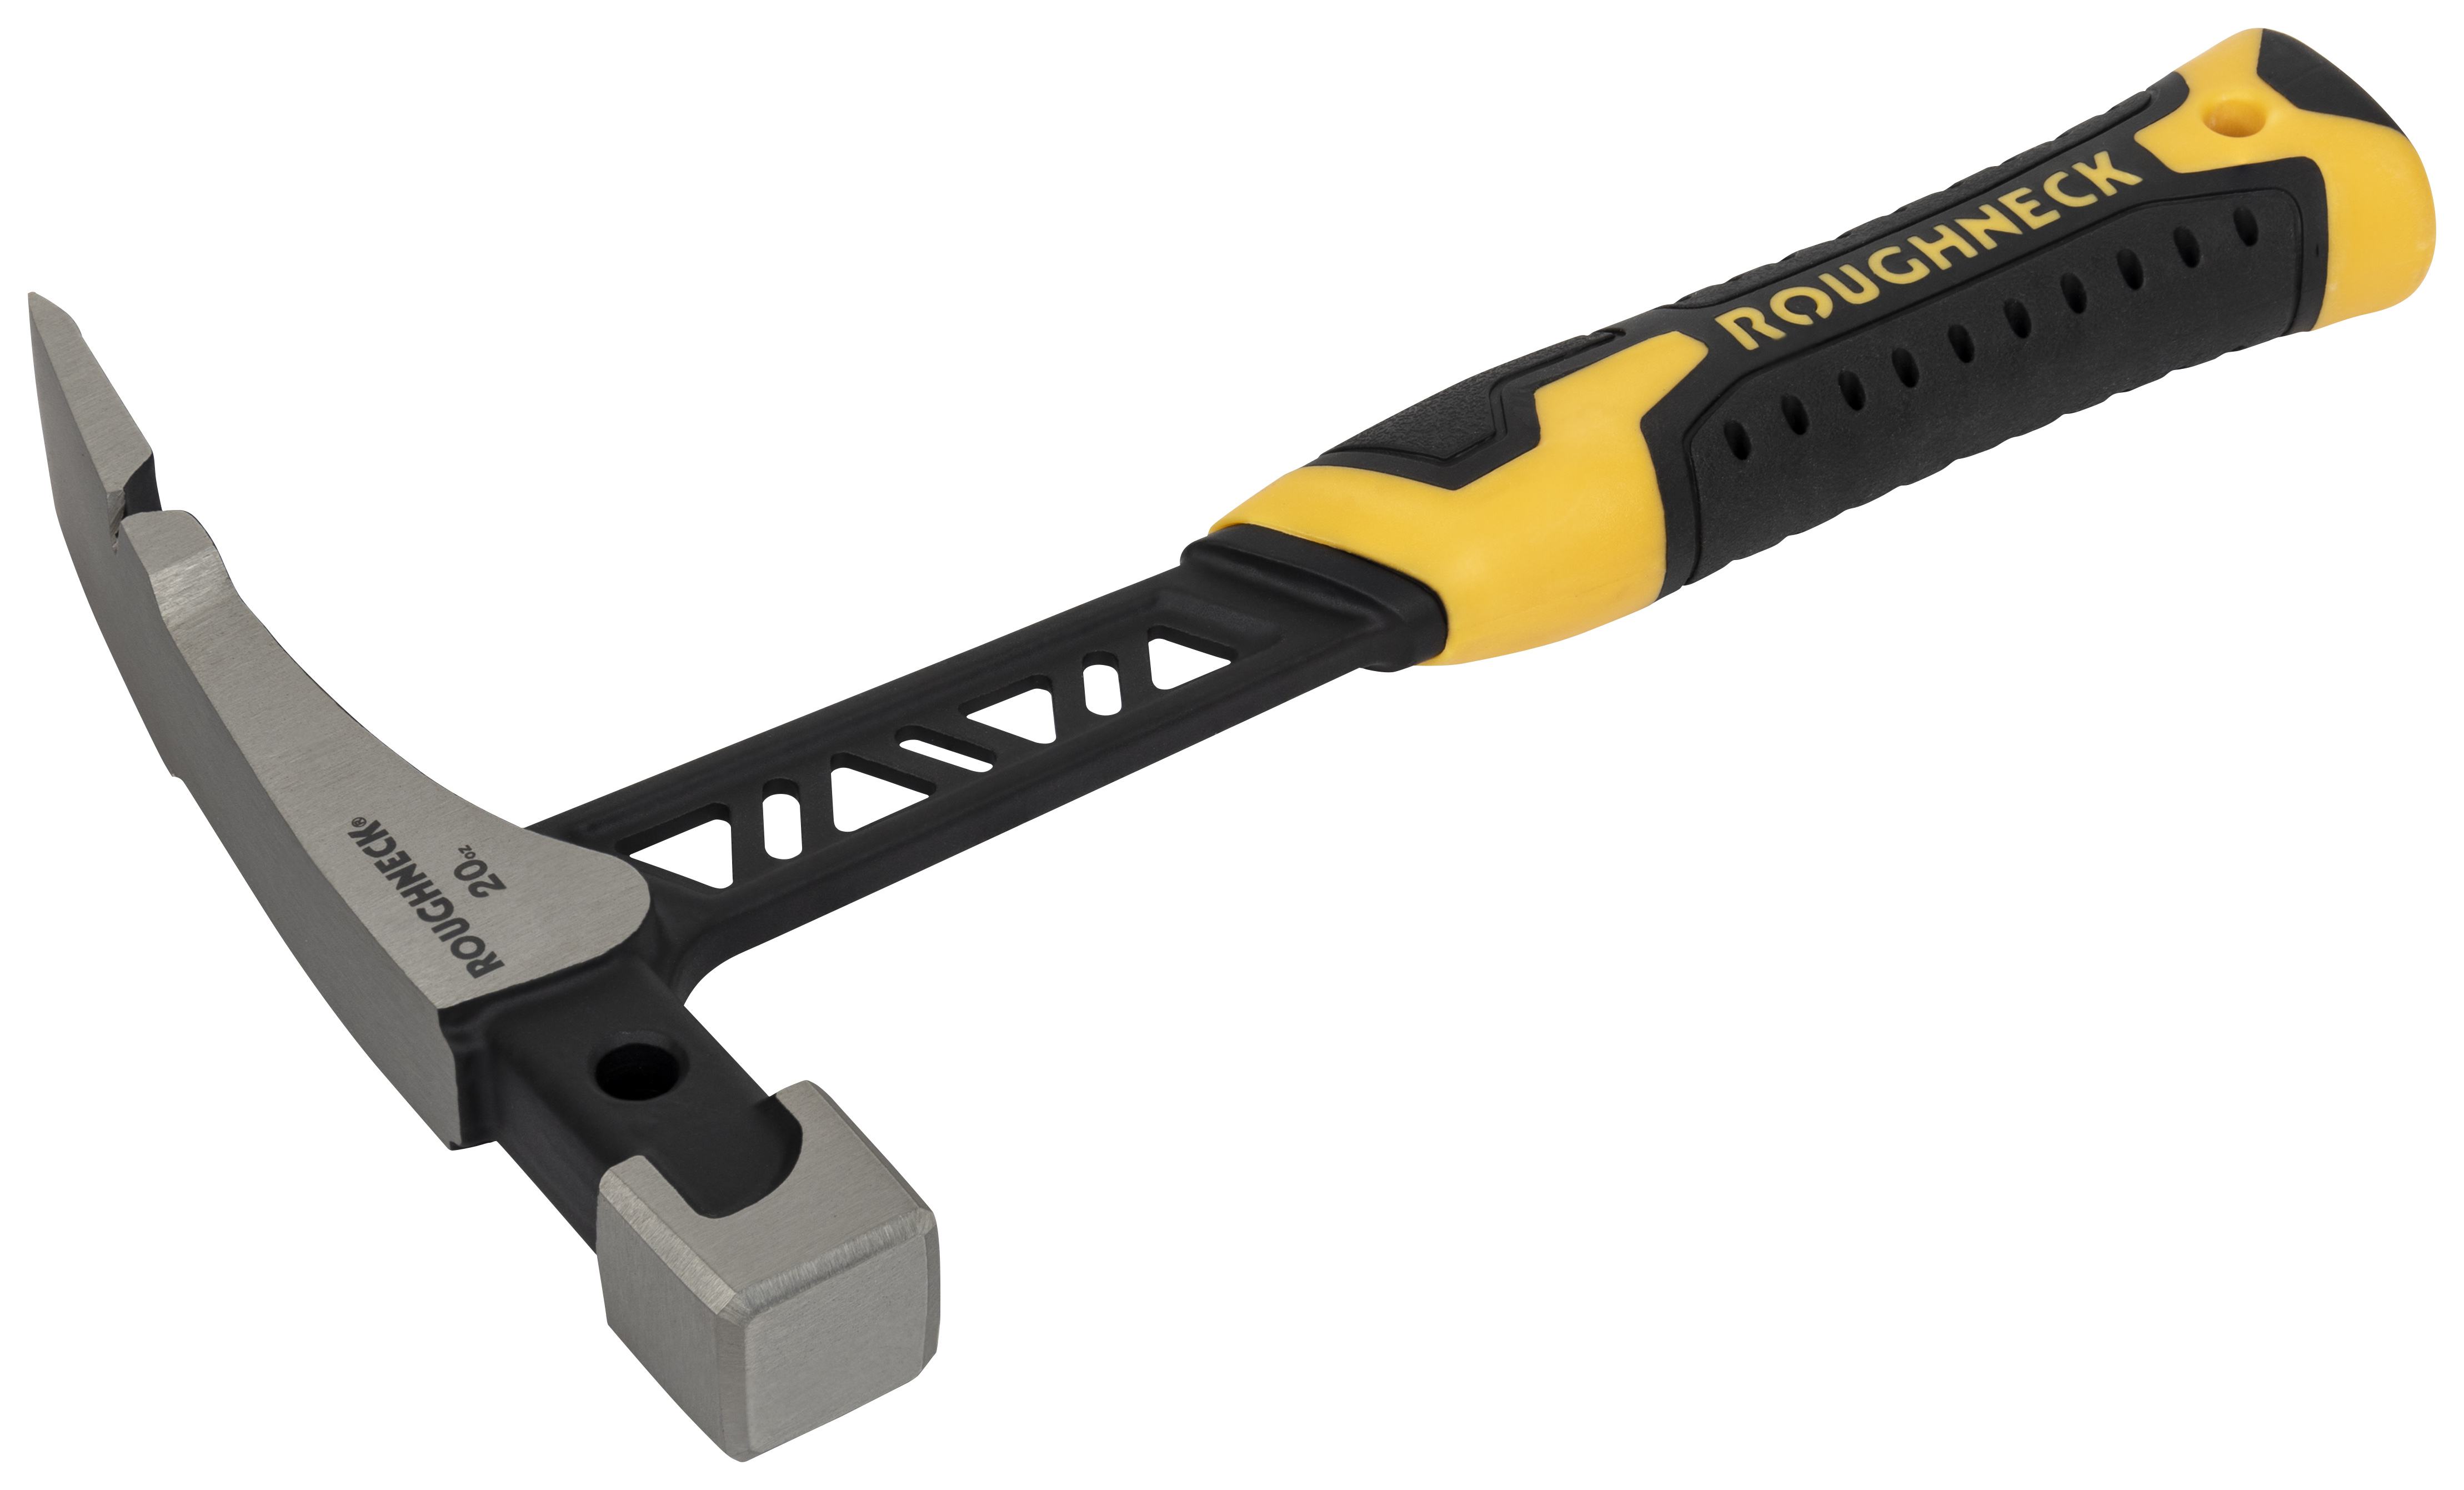 Roughneck Gorilla 11-020 V-Series Brick Cutting Hammer - 20oz